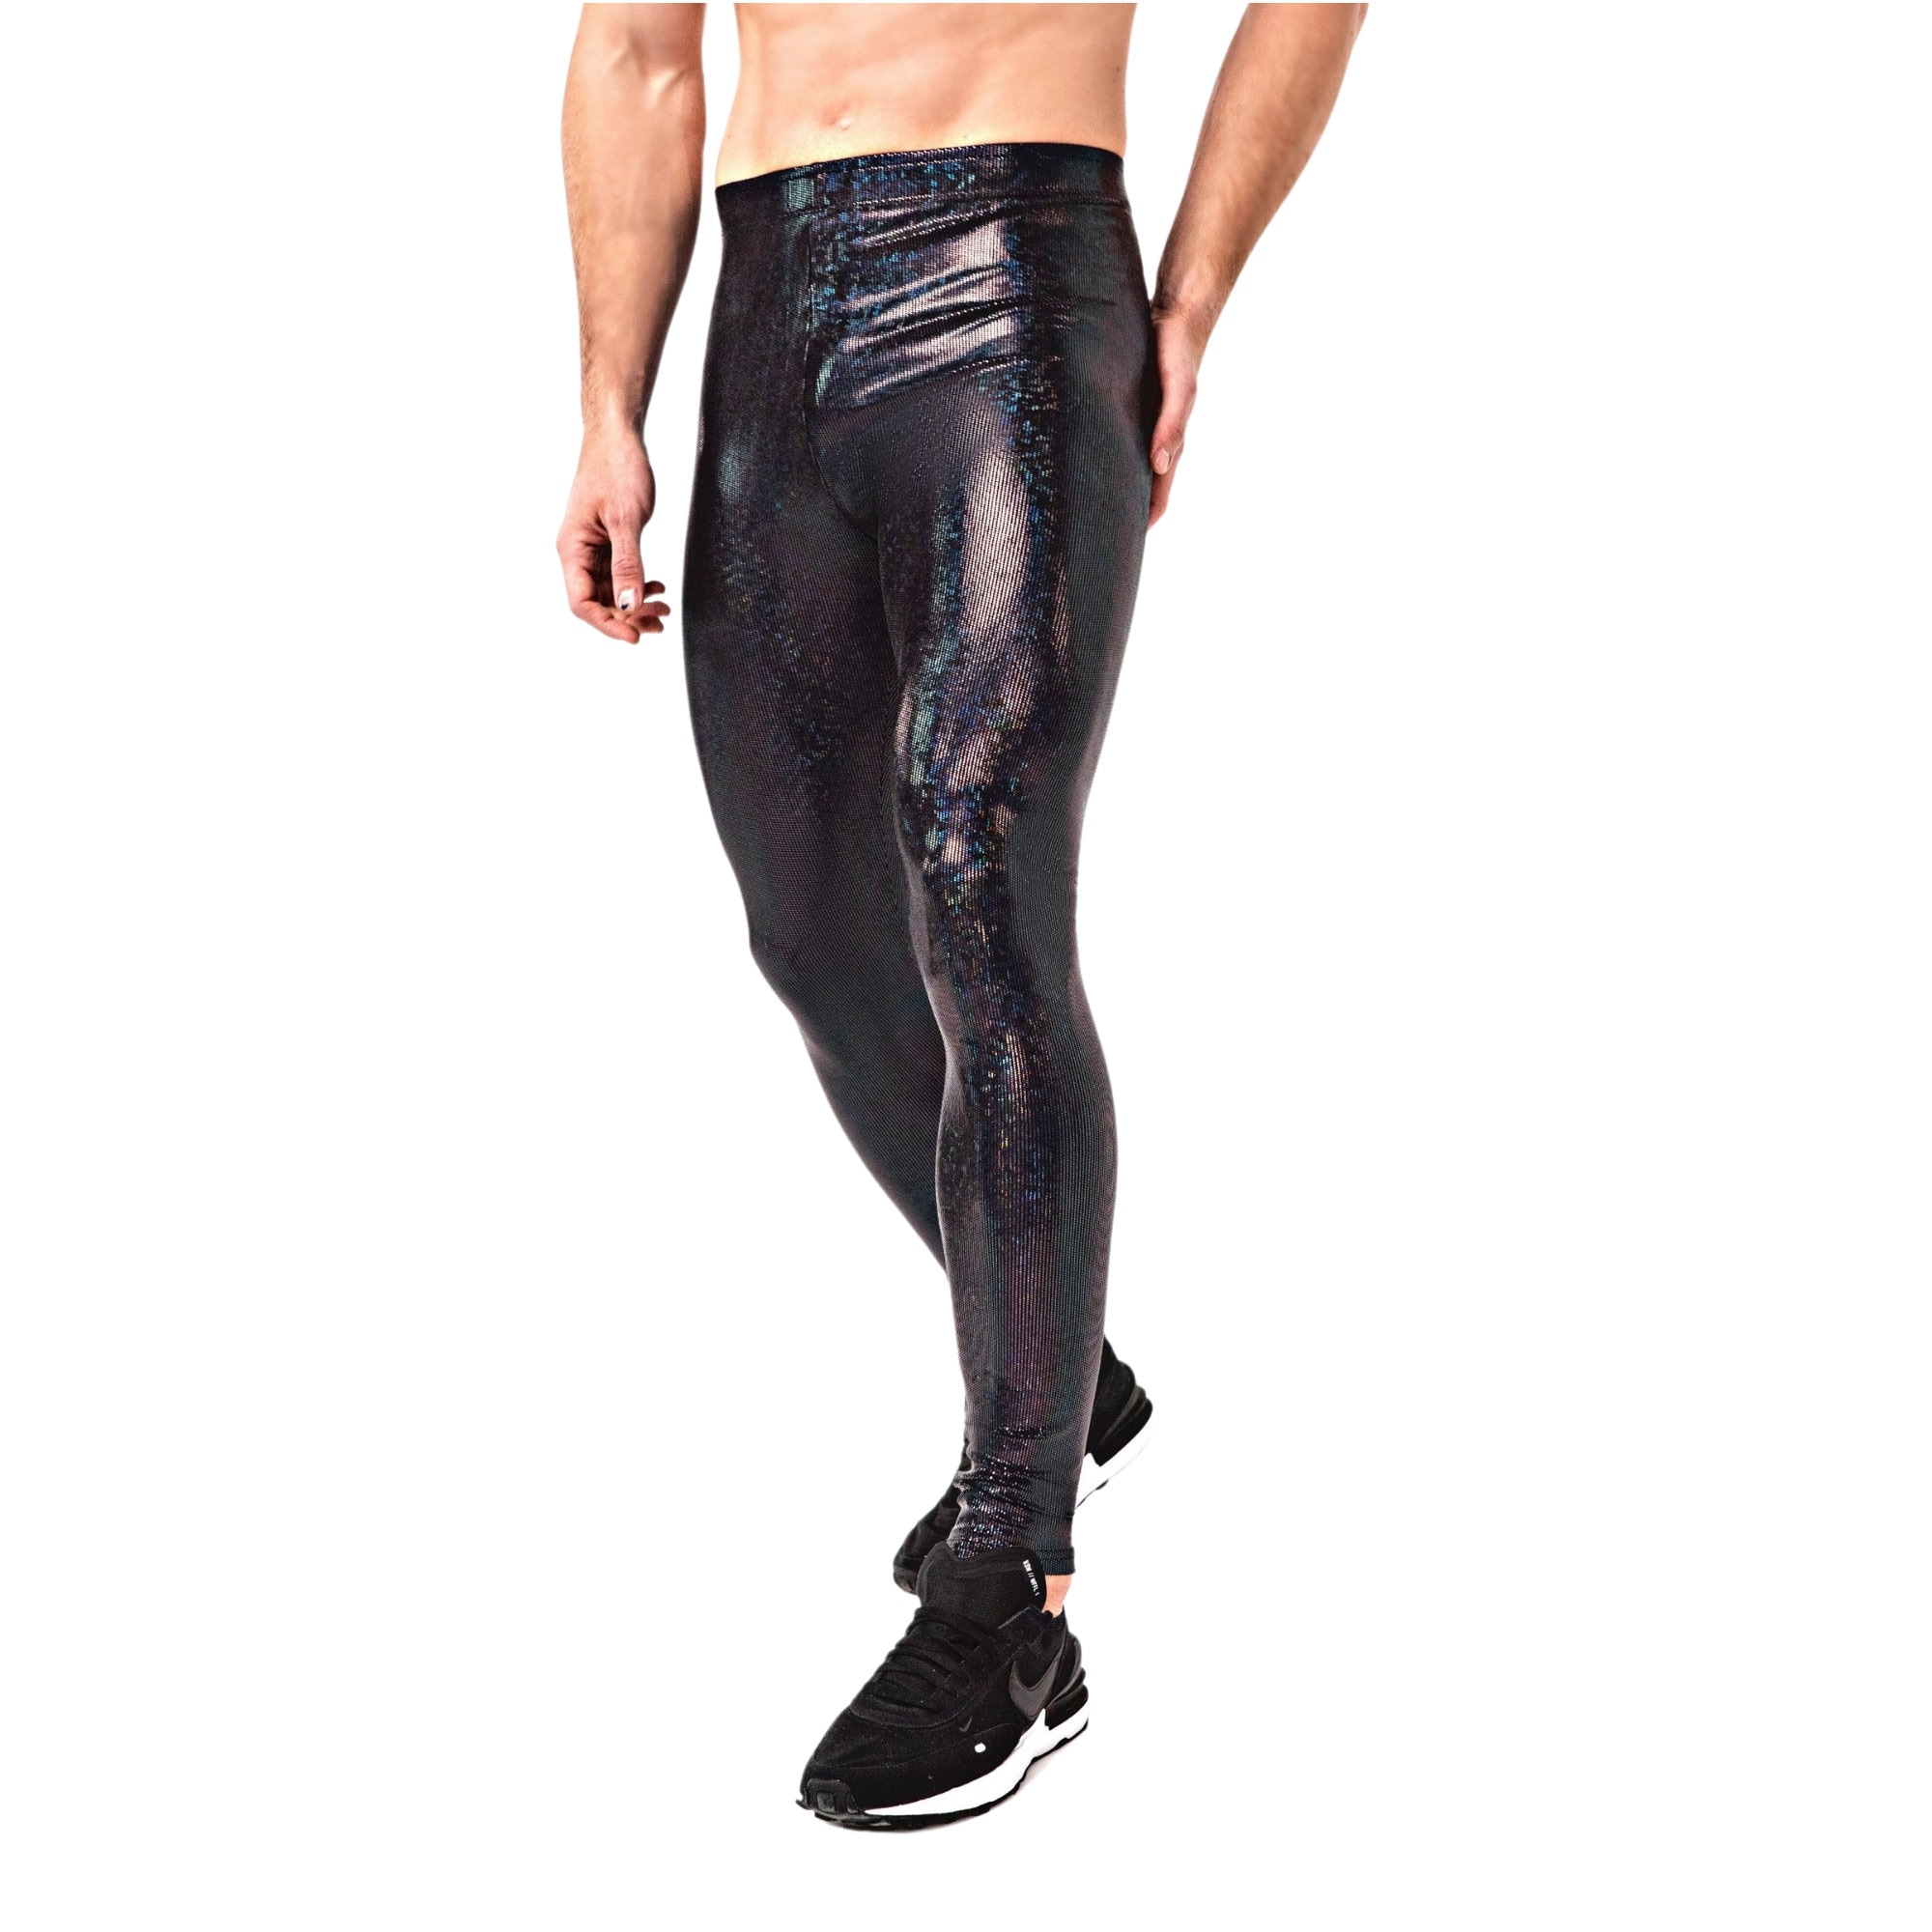 Shiny Black Metallic Men's Leggings, Black Shiny Meggings, Stretchy Gym  Spandex Pants for Men, Esentric Party Leggings, Festival Outfits -   Canada